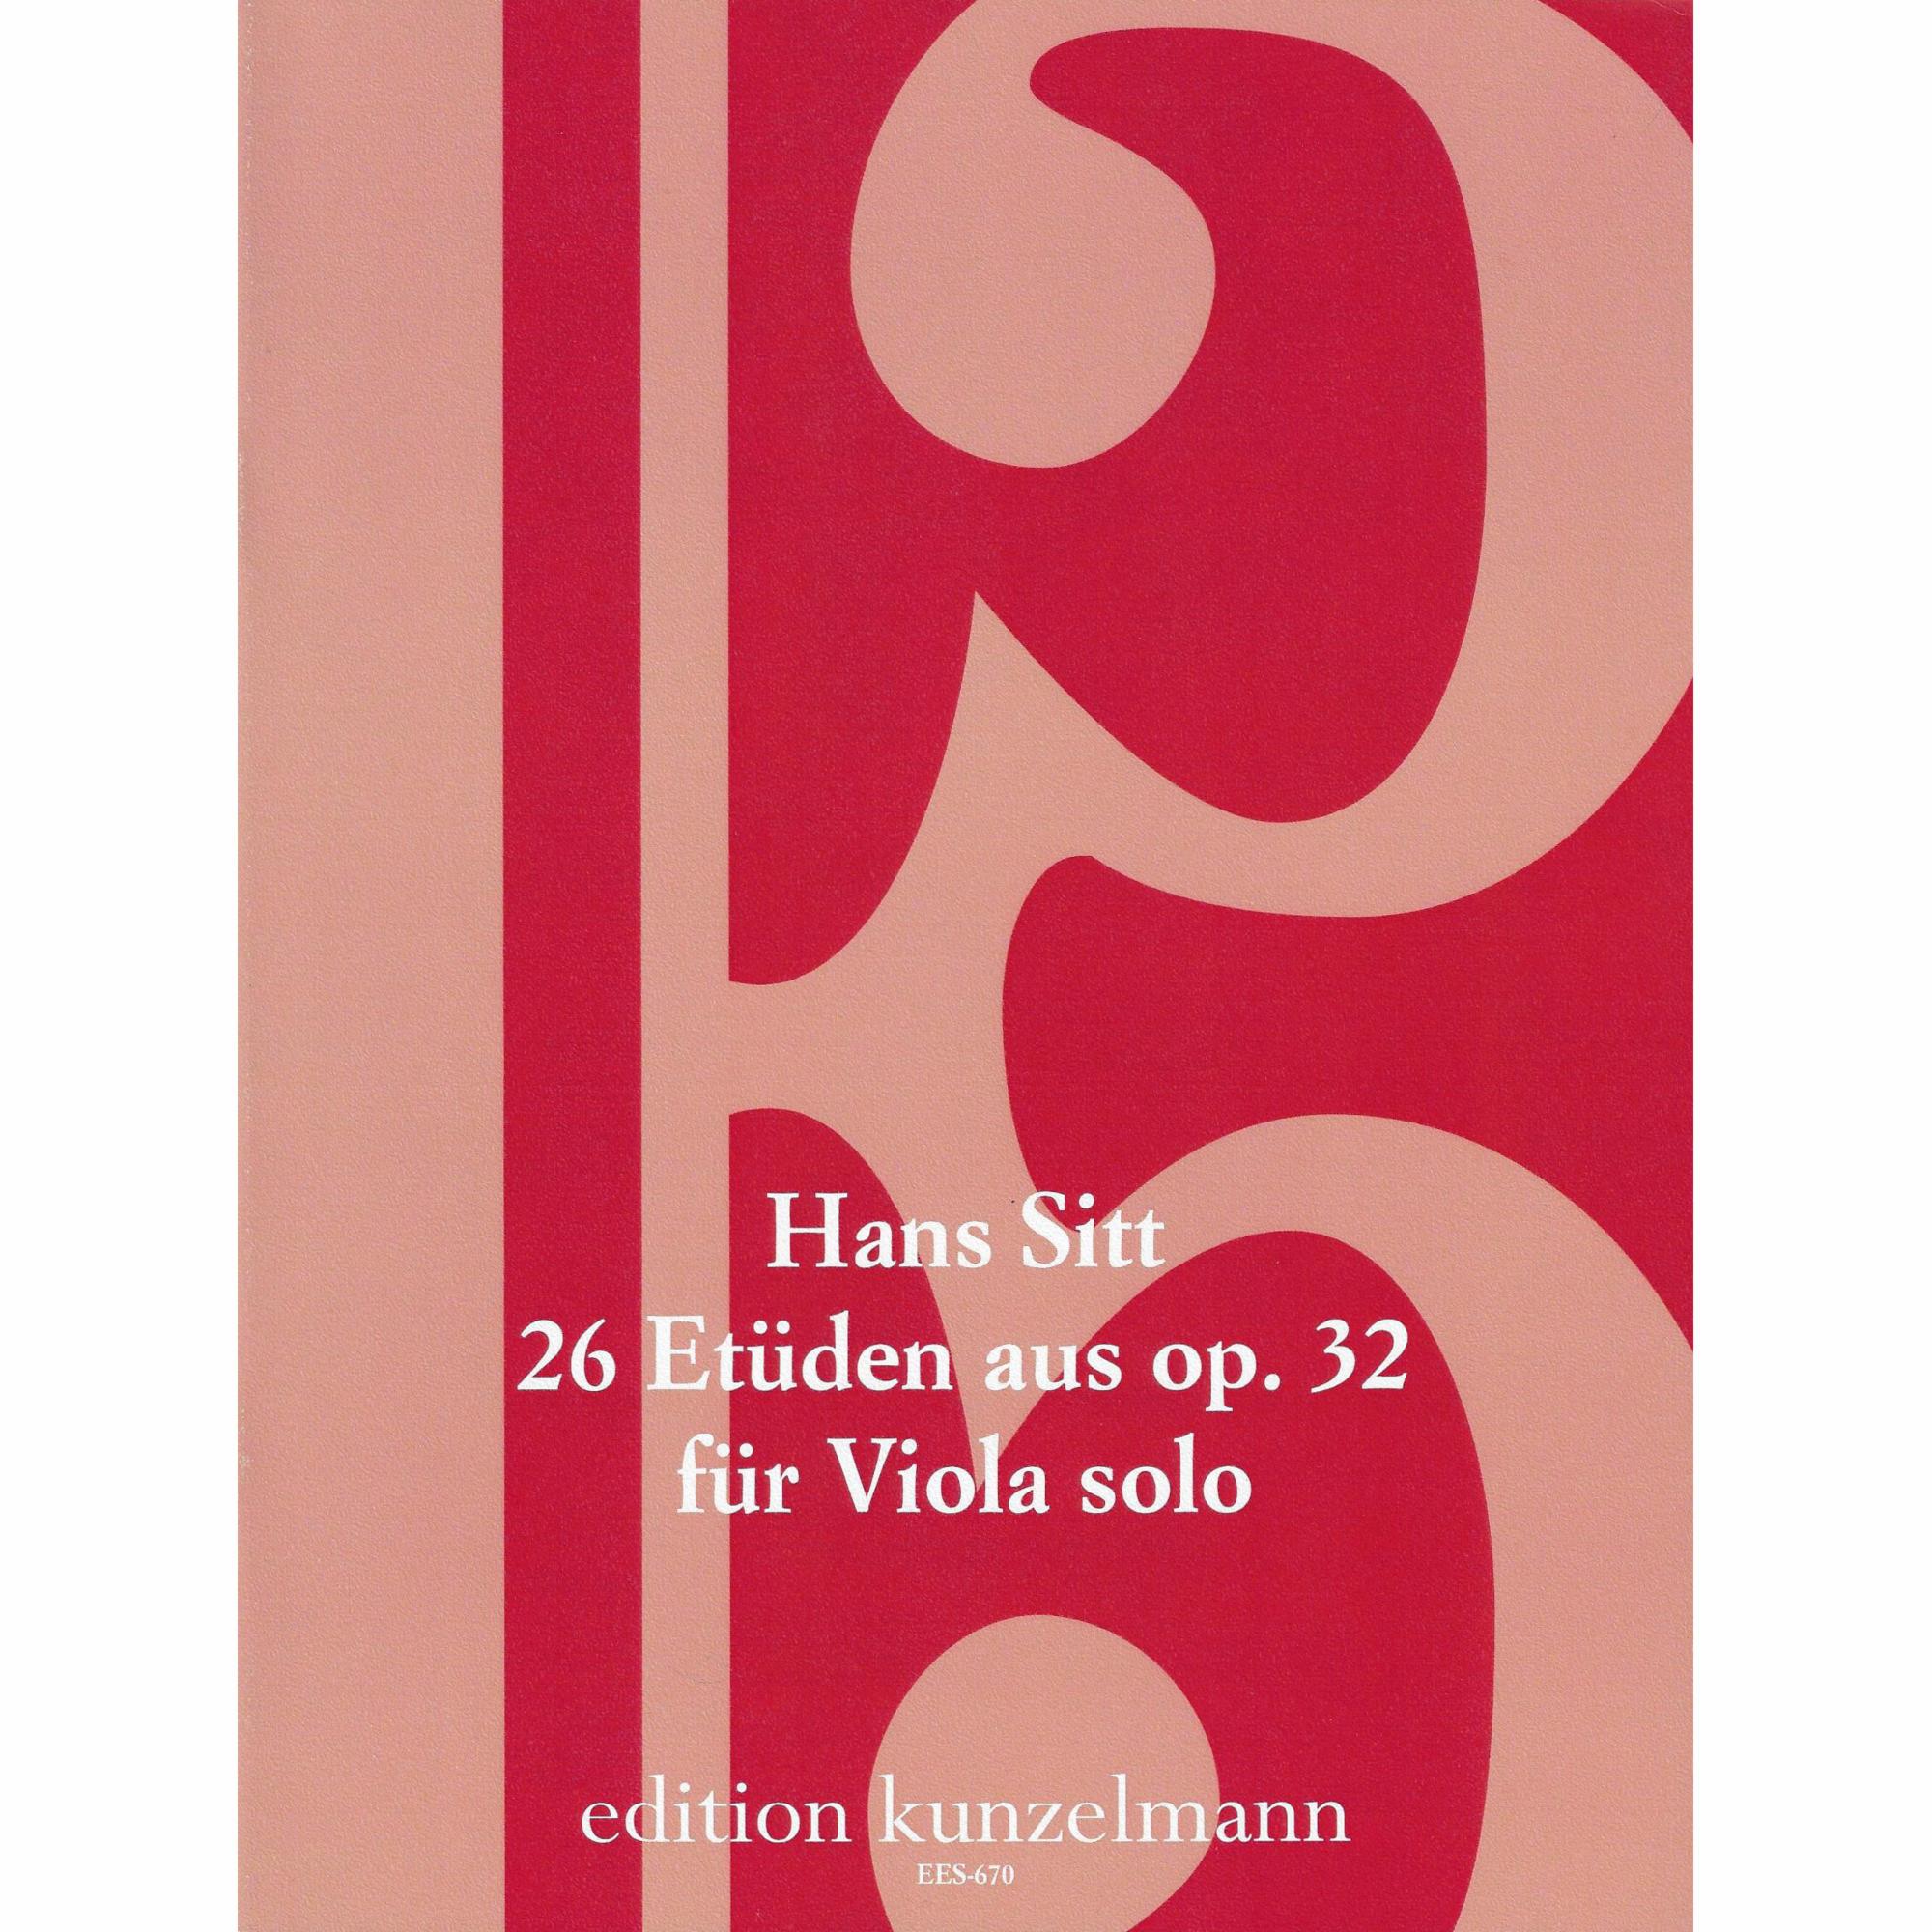 Sitt -- Etudes, from Op. 32 for Viola